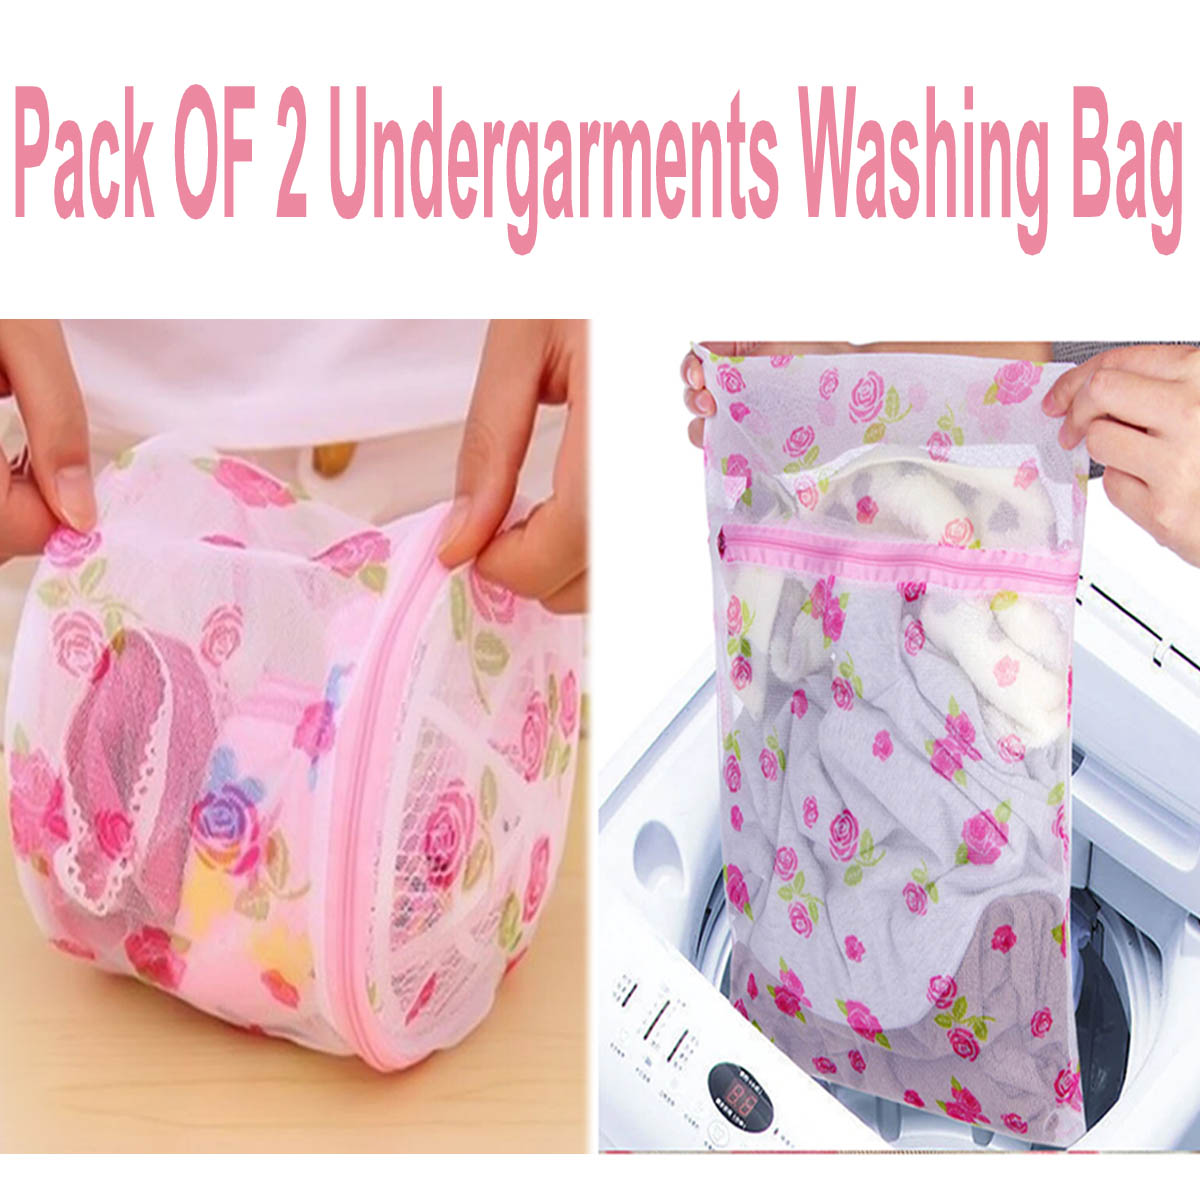 Pack of 2 - Multi-purpose Zippered Mesh Laundry Bags for Blouse, Hosiery, Stocking, Underwear, Bra Lingerie